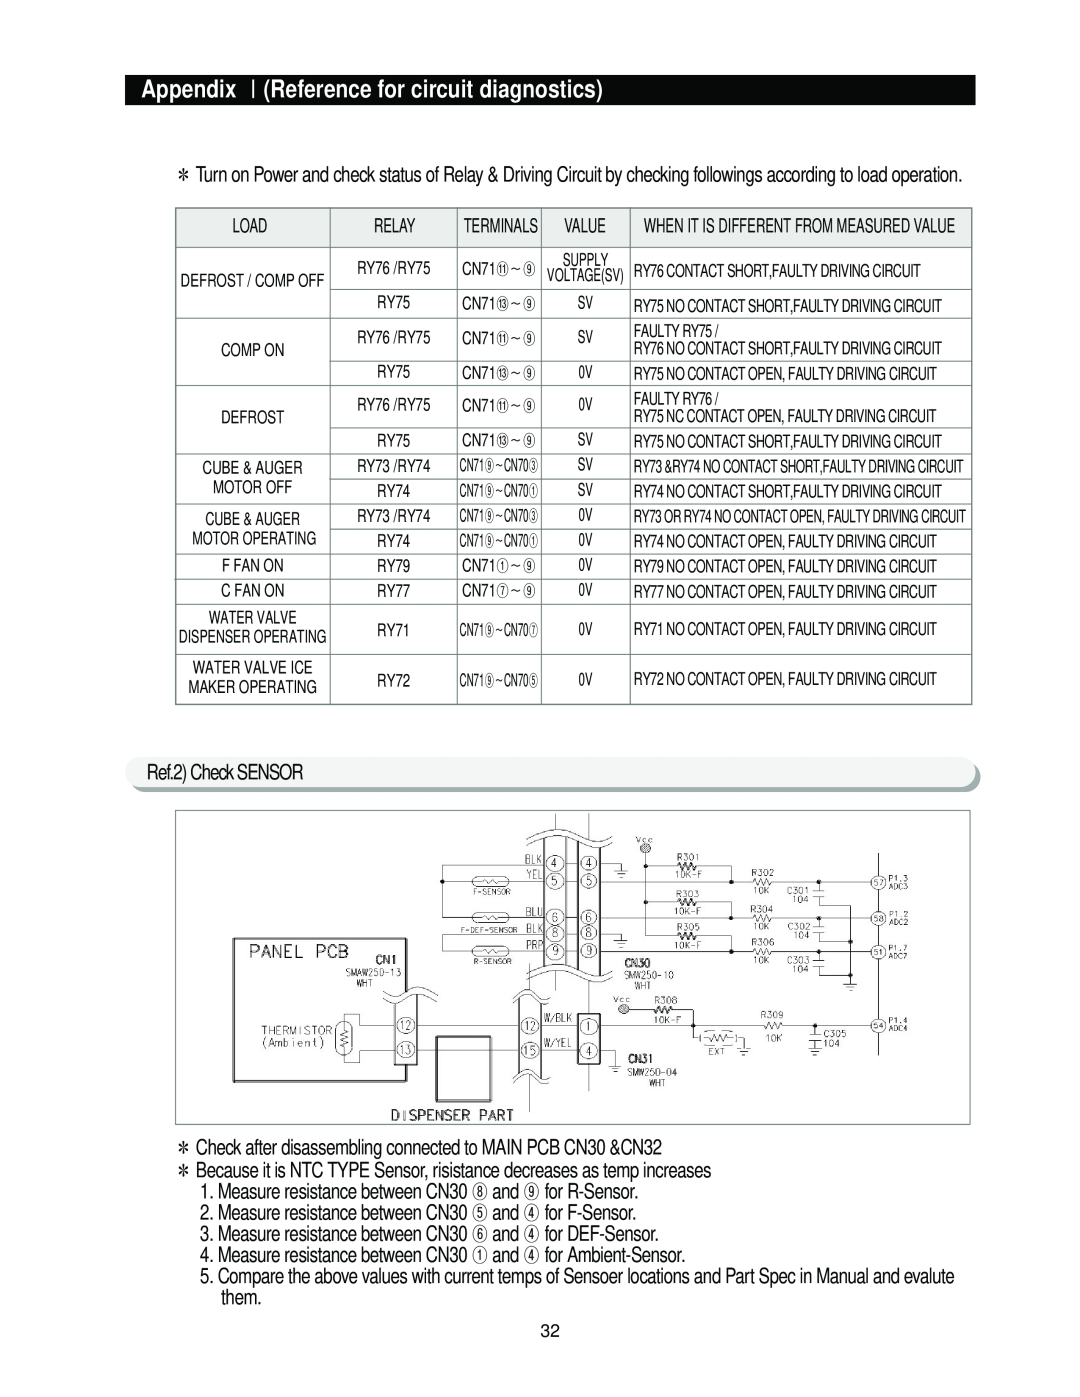 Samsung RS2*3* manual Appendix ⅠReference for circuit diagnostics, Ref.2 Check SENSOR 